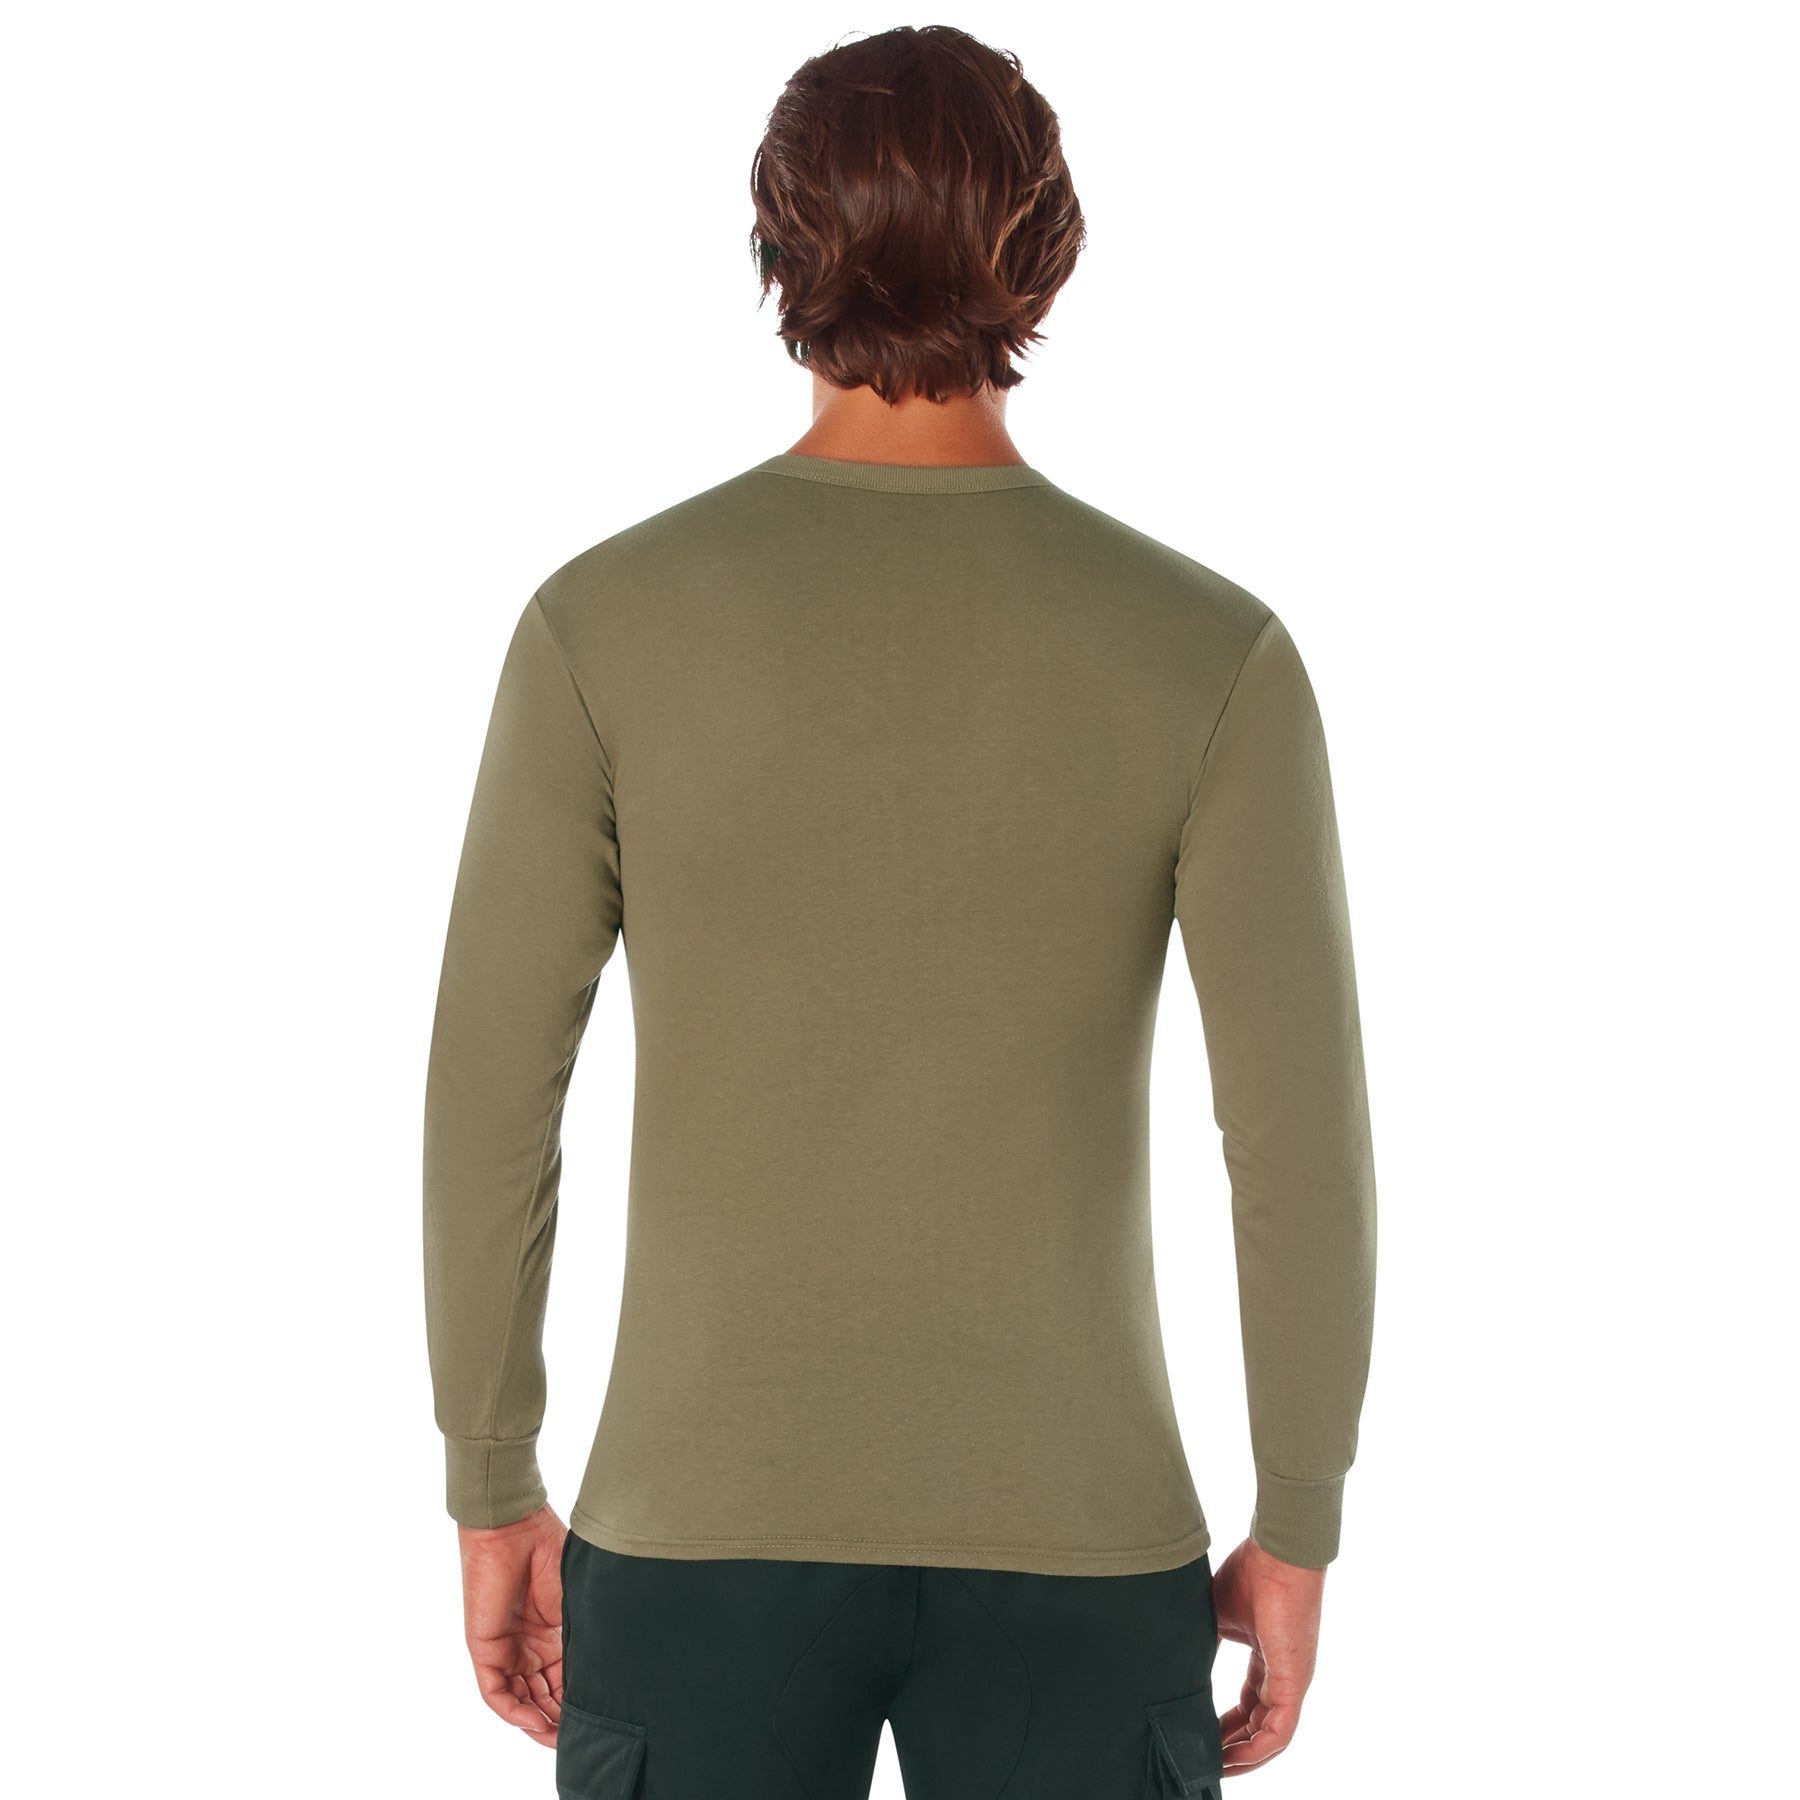 [AR 670-1][Military] Poly/Cotton Long Sleeve Shirts